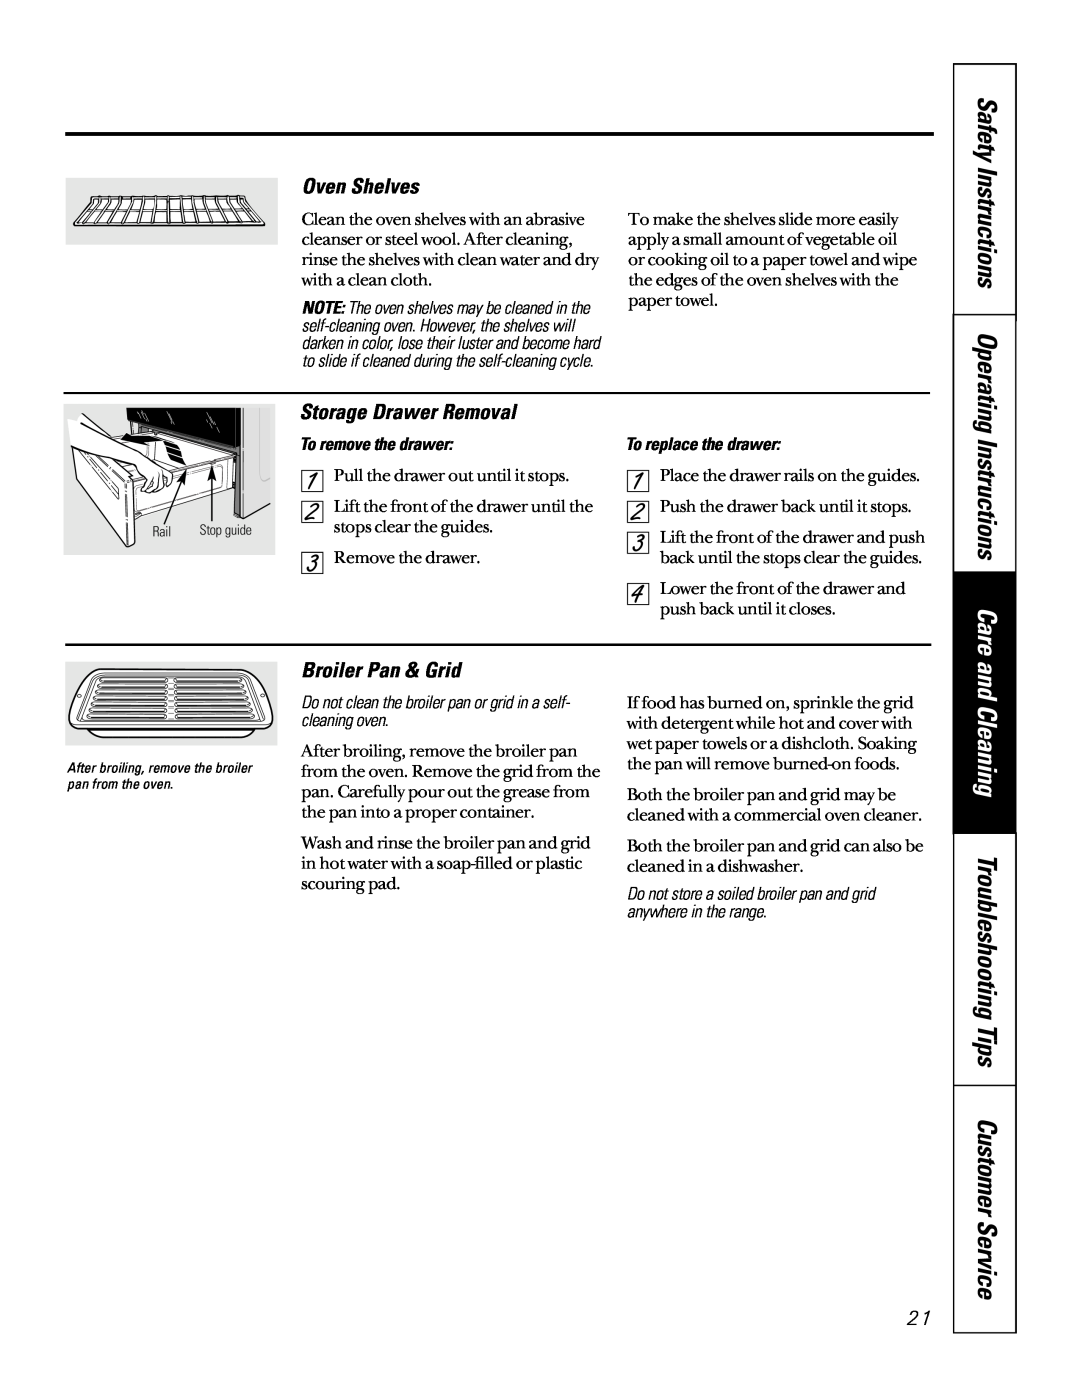 GE JBP79 owner manual Safety Instructions Operating, Oven Shelves, Storage Drawer Removal, Broiler Pan & Grid 